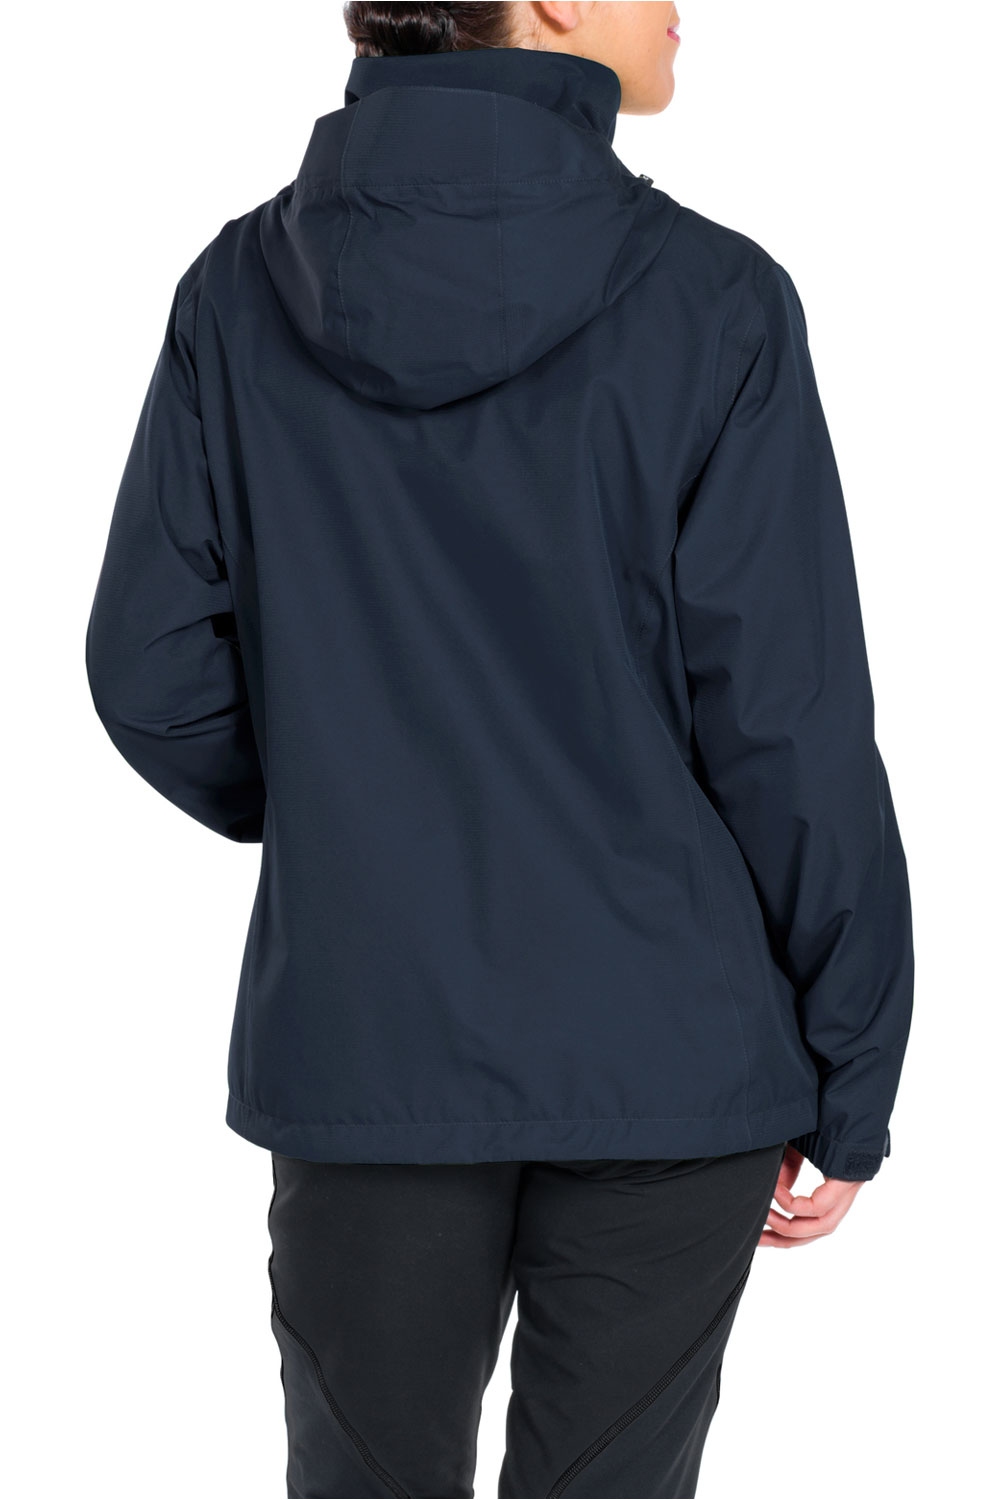 Vaude chaqueta impermeable mujer Womens Escape Light Jacket vista trasera